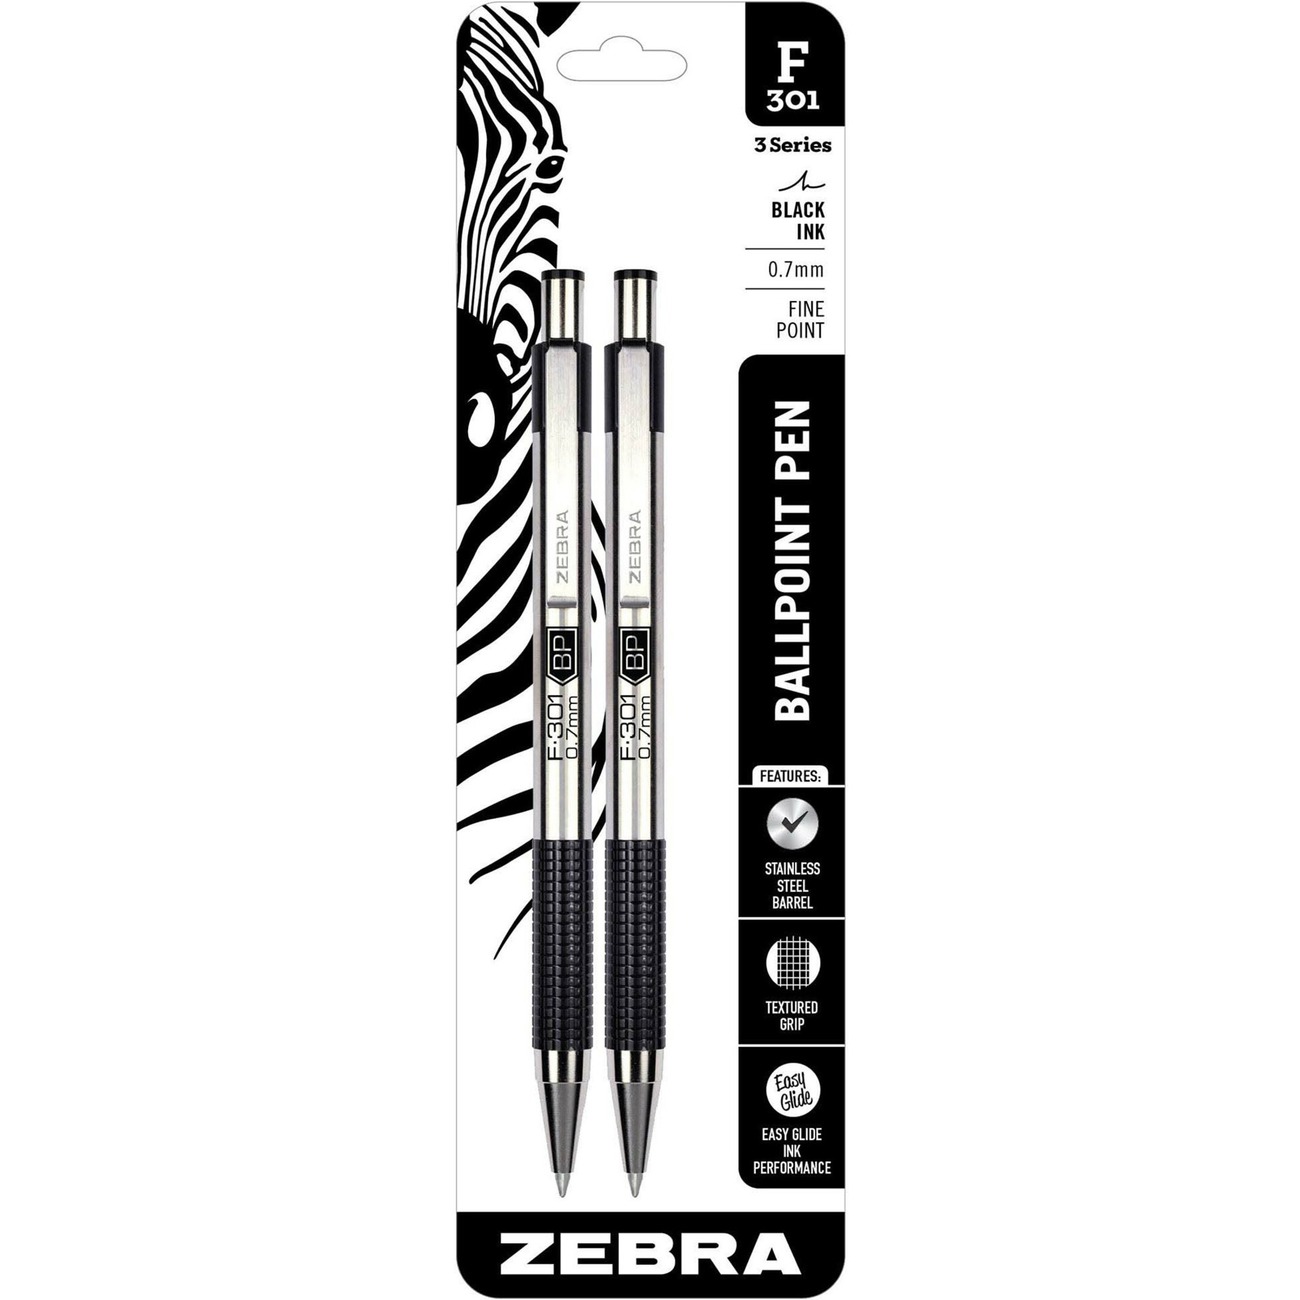 The Mizzou Store - Paper Mate Flair Felt-Tip Pens 4-Pack